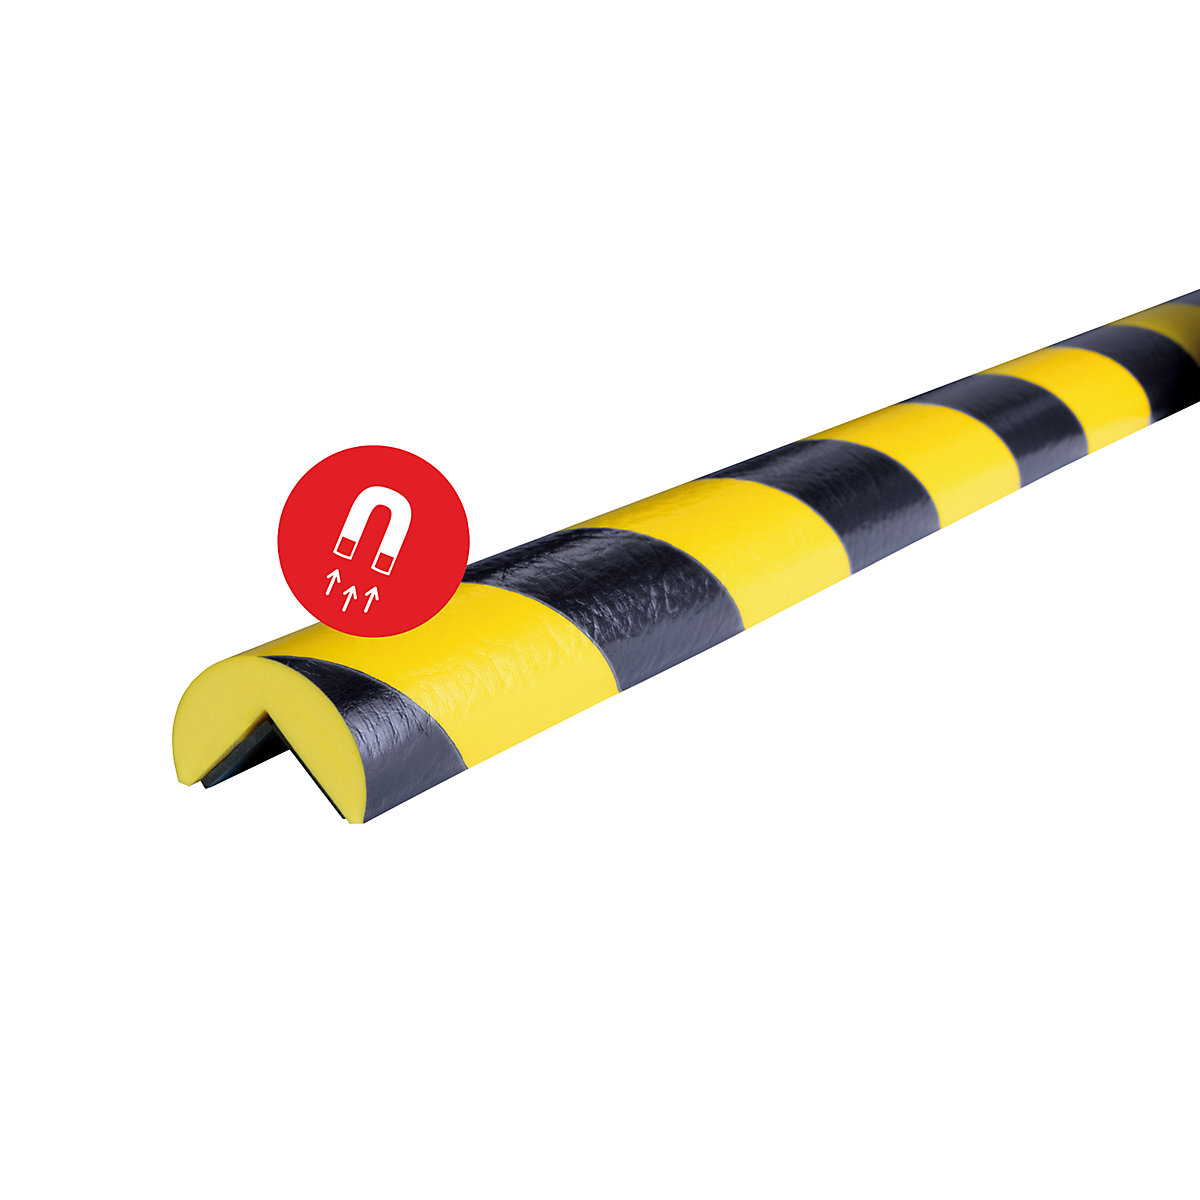 Knuffi®-hoekbescherming – SHG, type A, stuk van 1 m, zwart/geel, magneethoudend-30